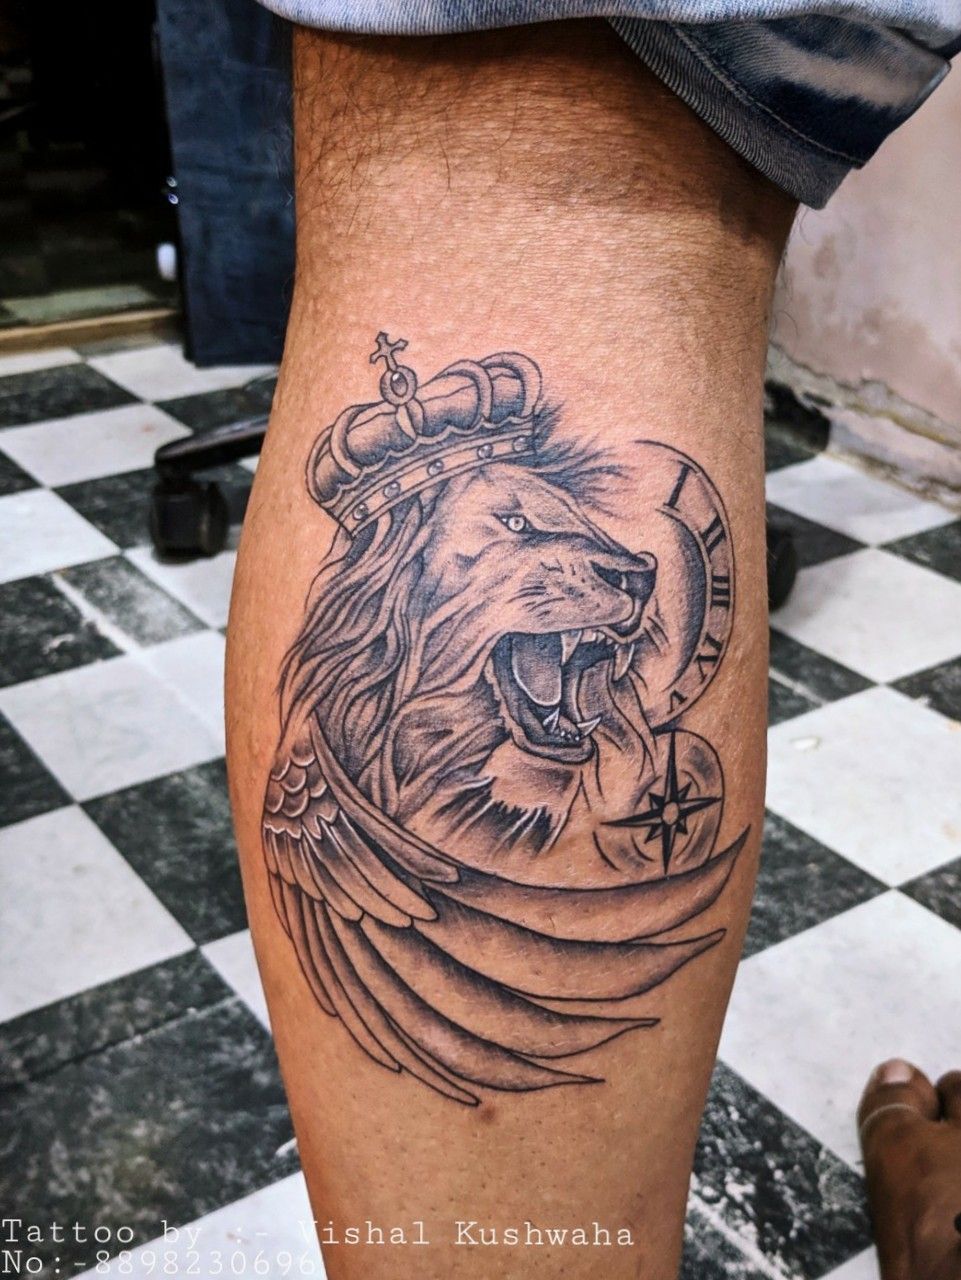 Update 87+ about compass lion tattoo super cool .vn